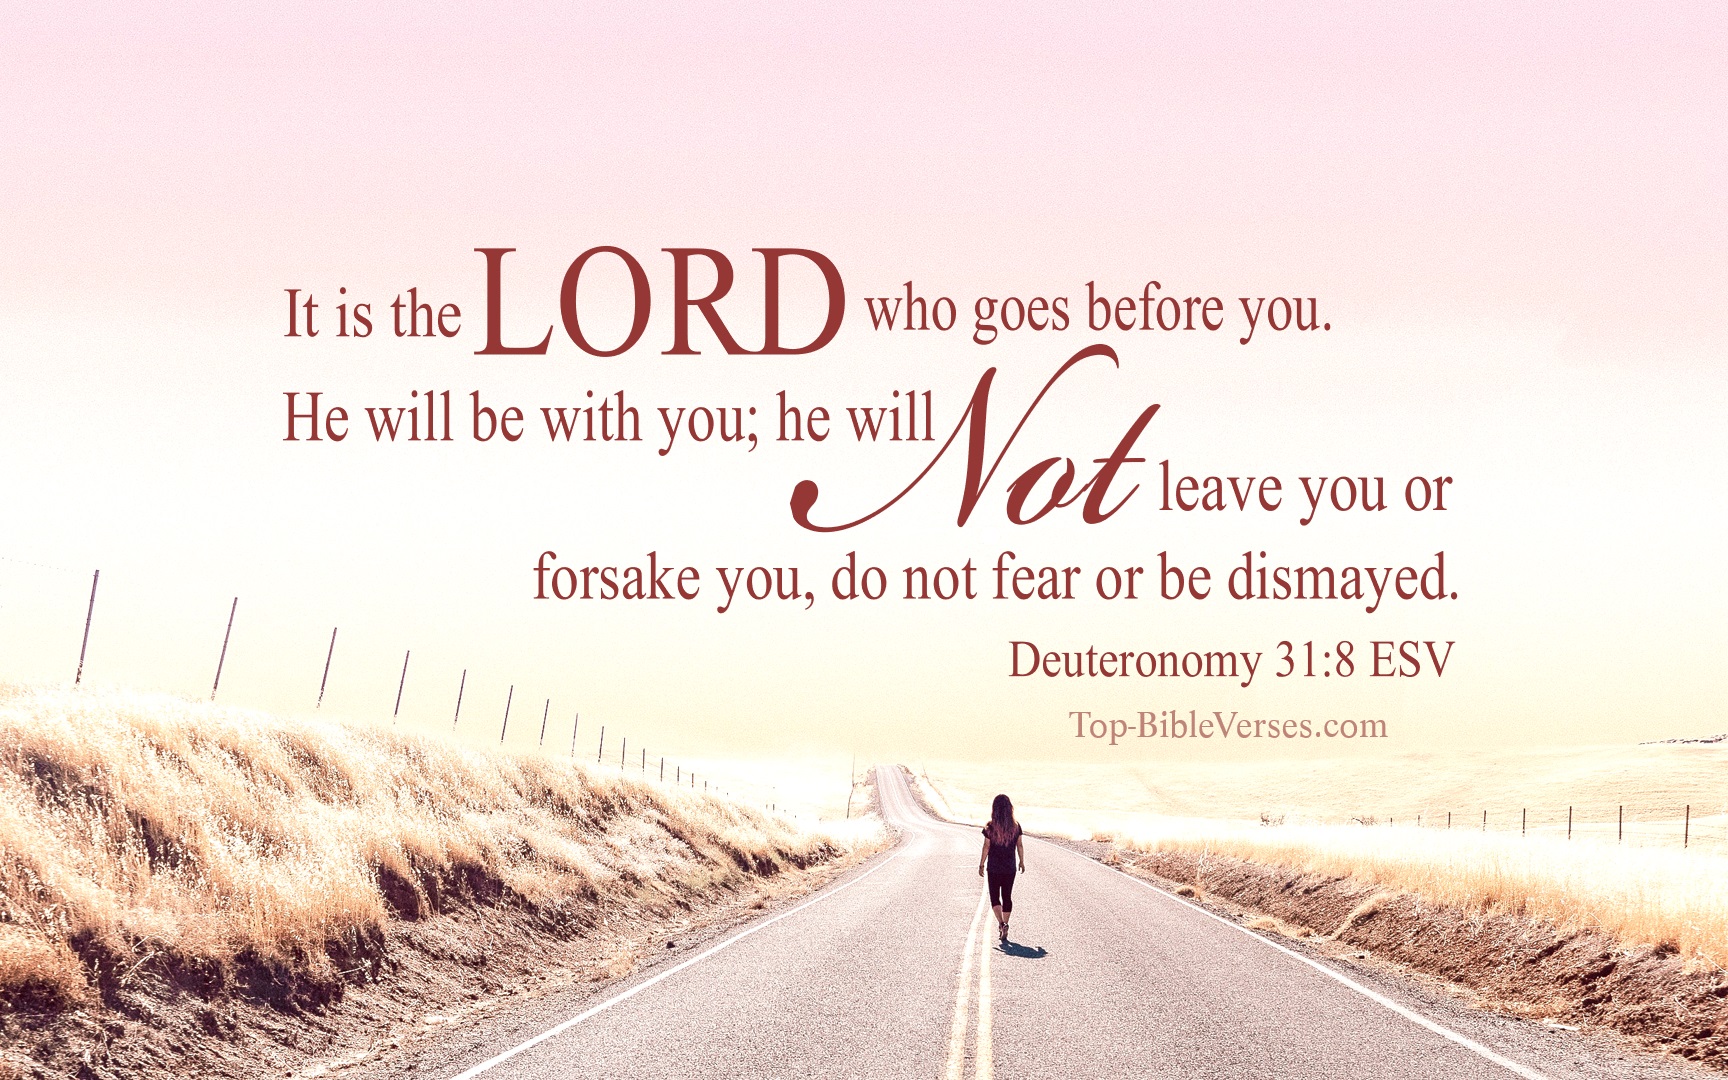 Motivational Bible verses